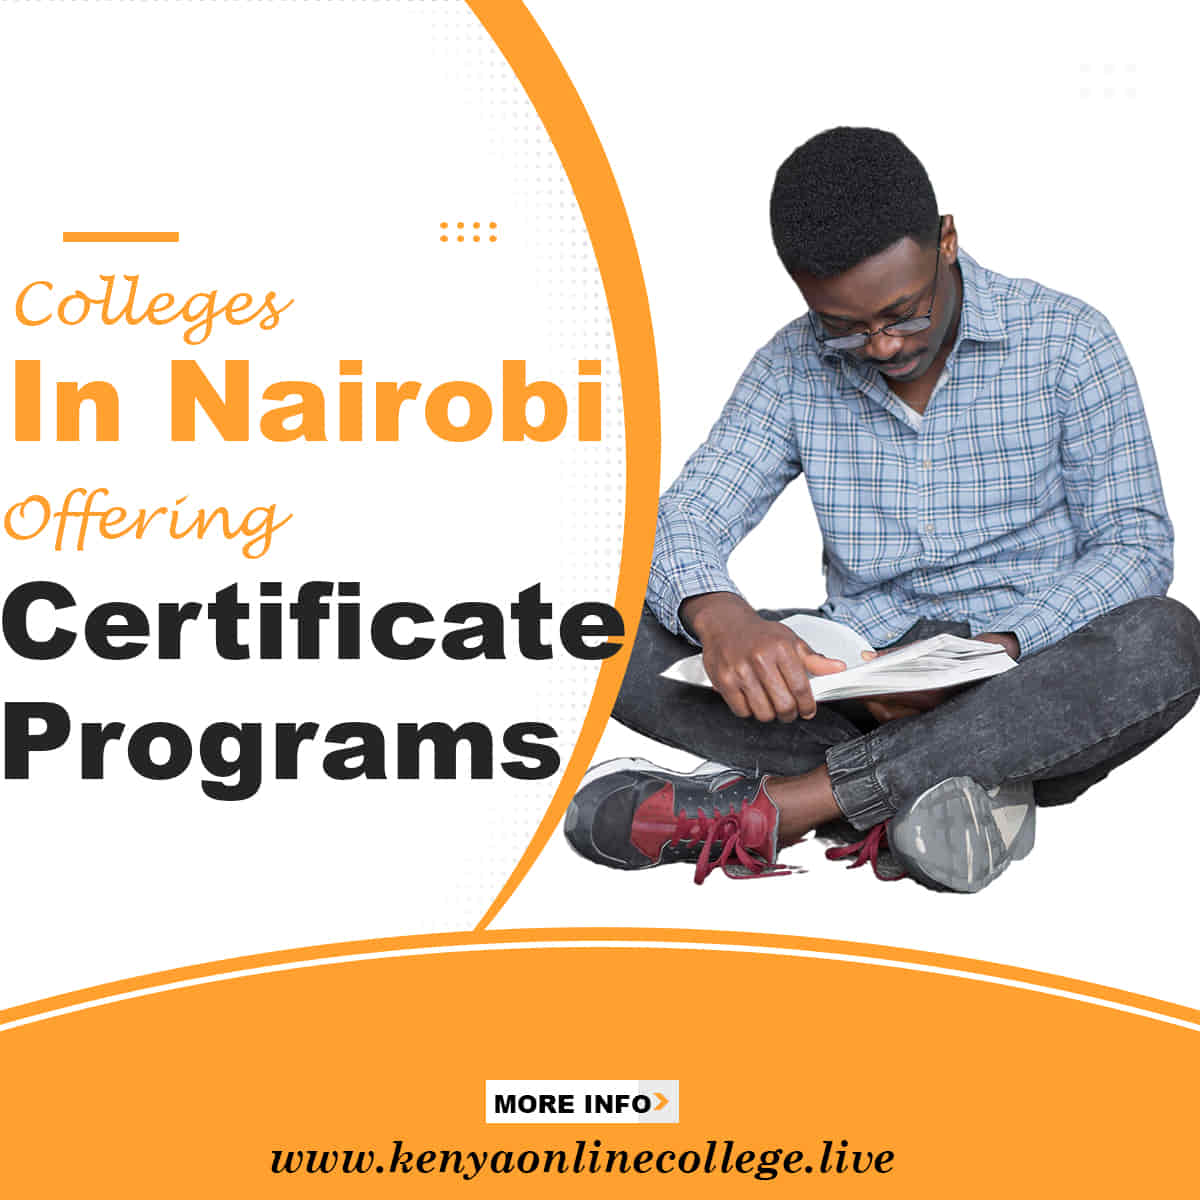 Colleges in Nairobi offering certificate programs